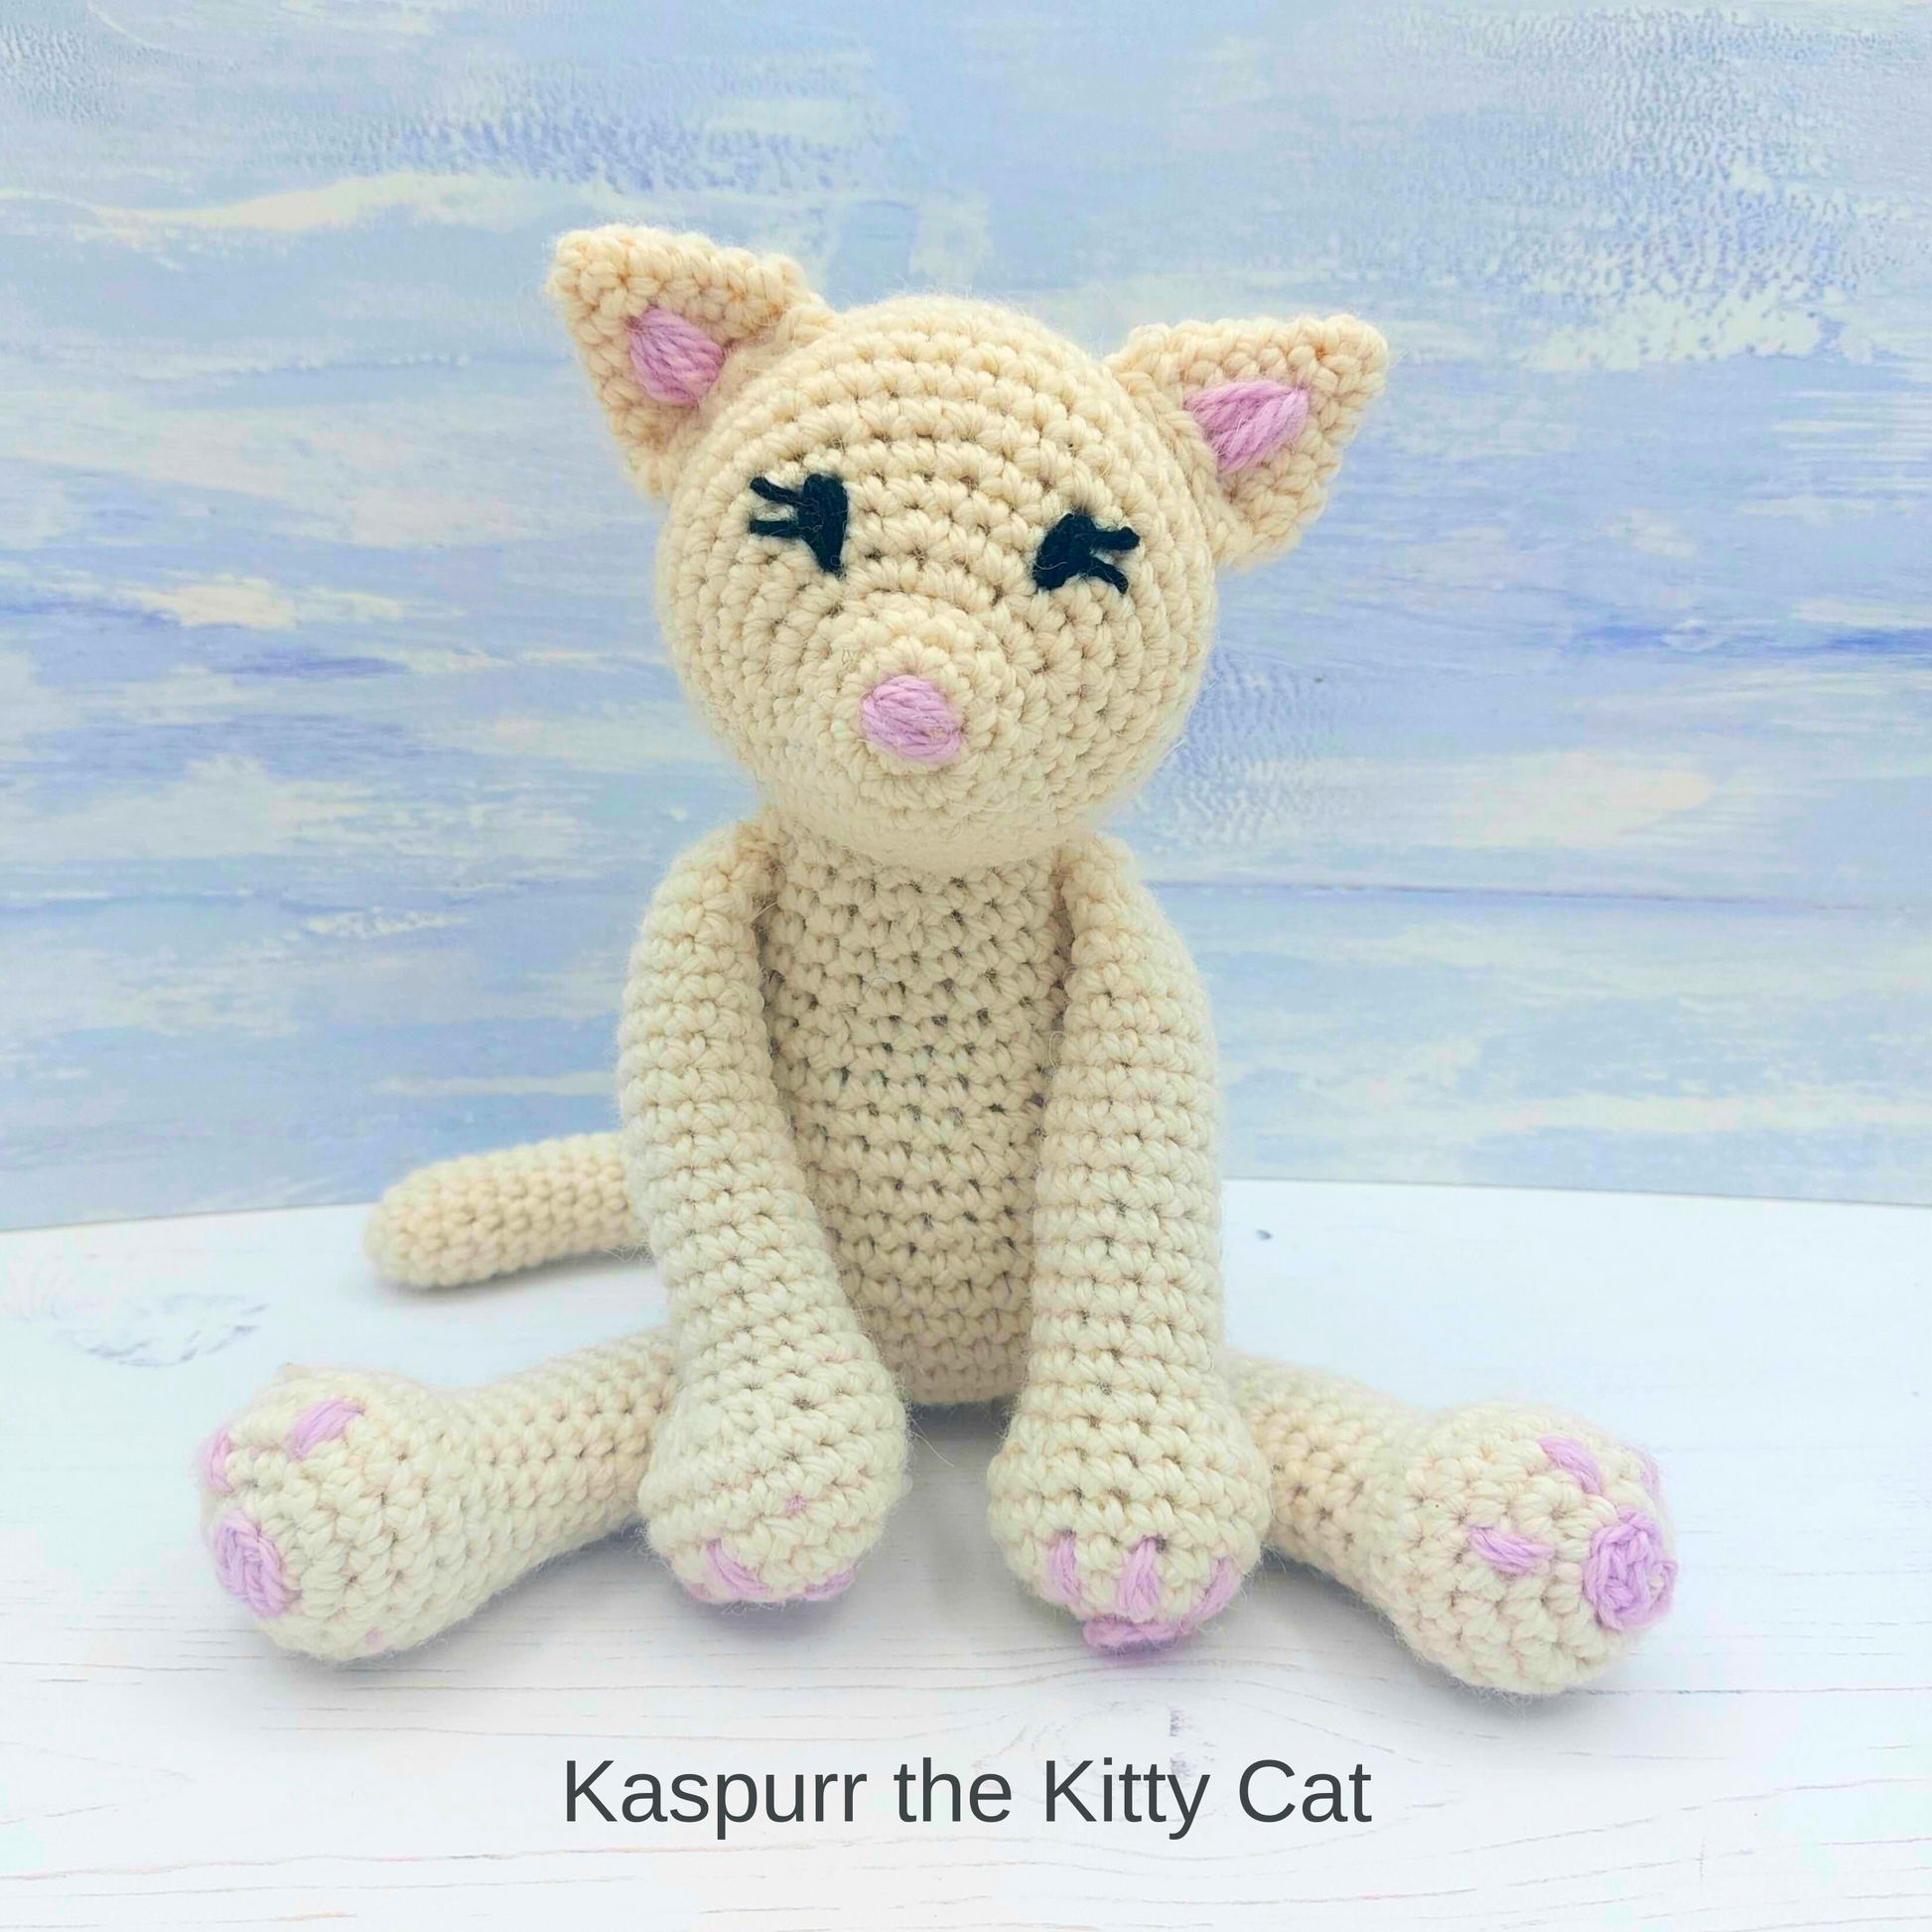 Kaspurr the Kitty Cat